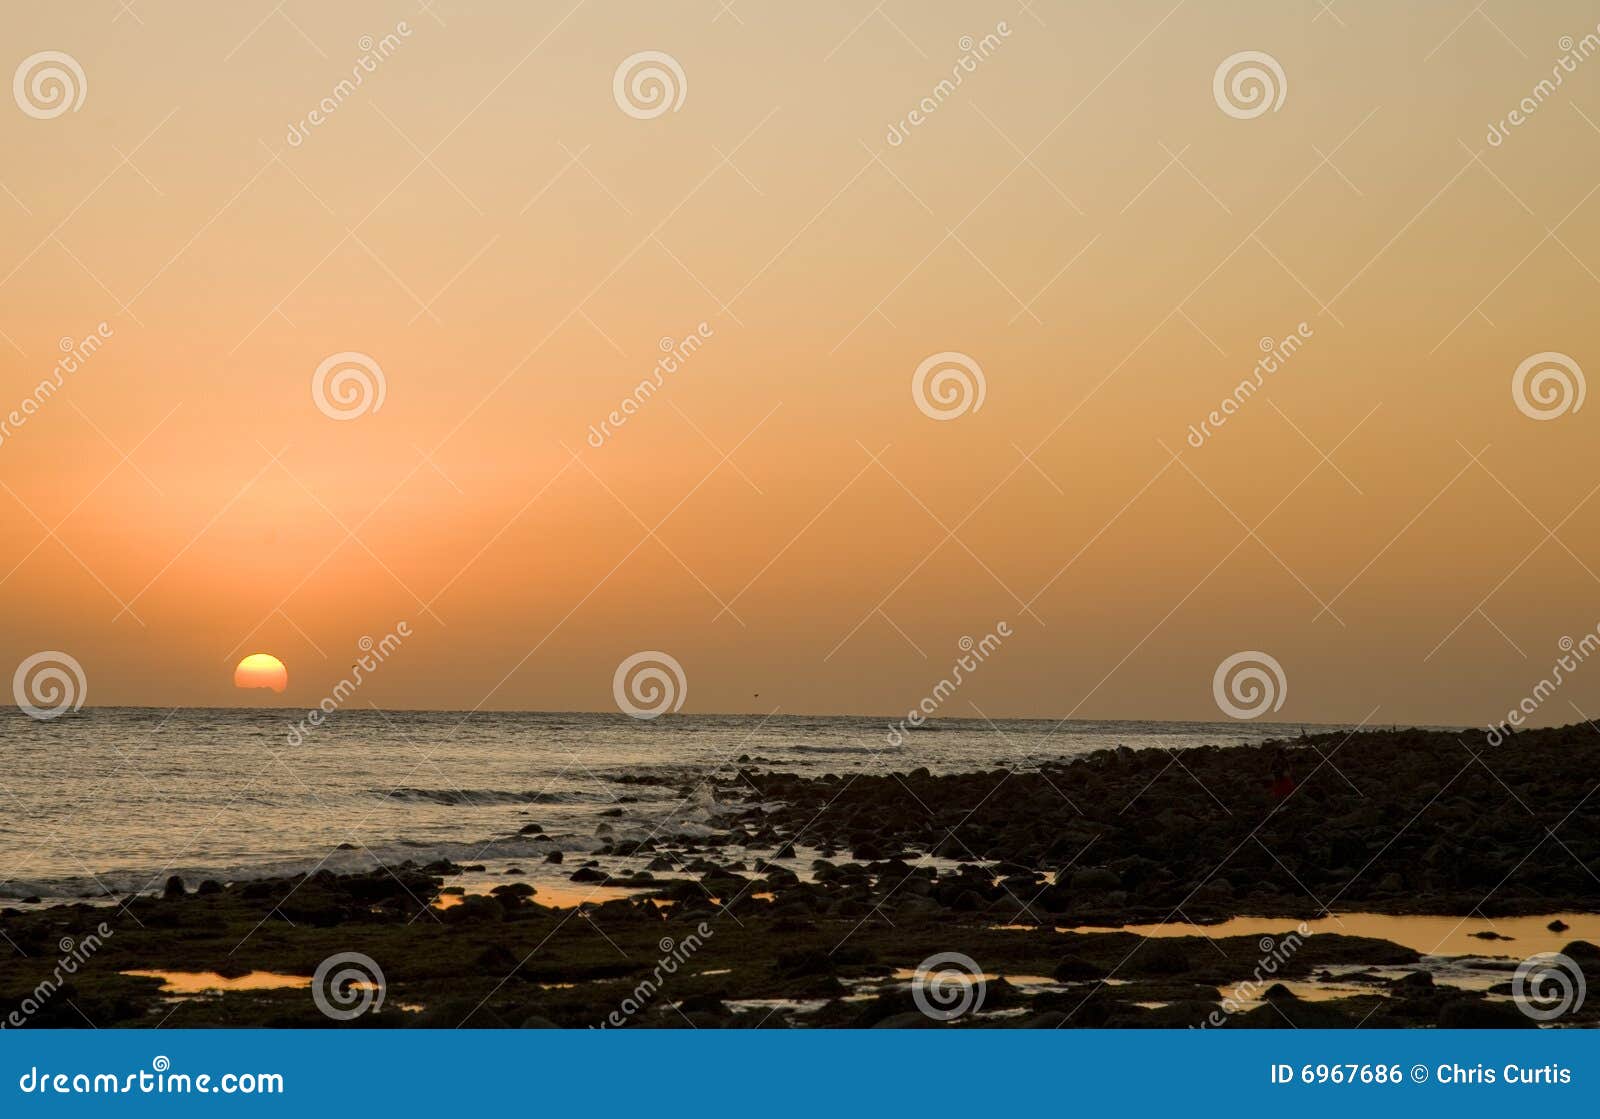 sunset at puerto penasco, mexico